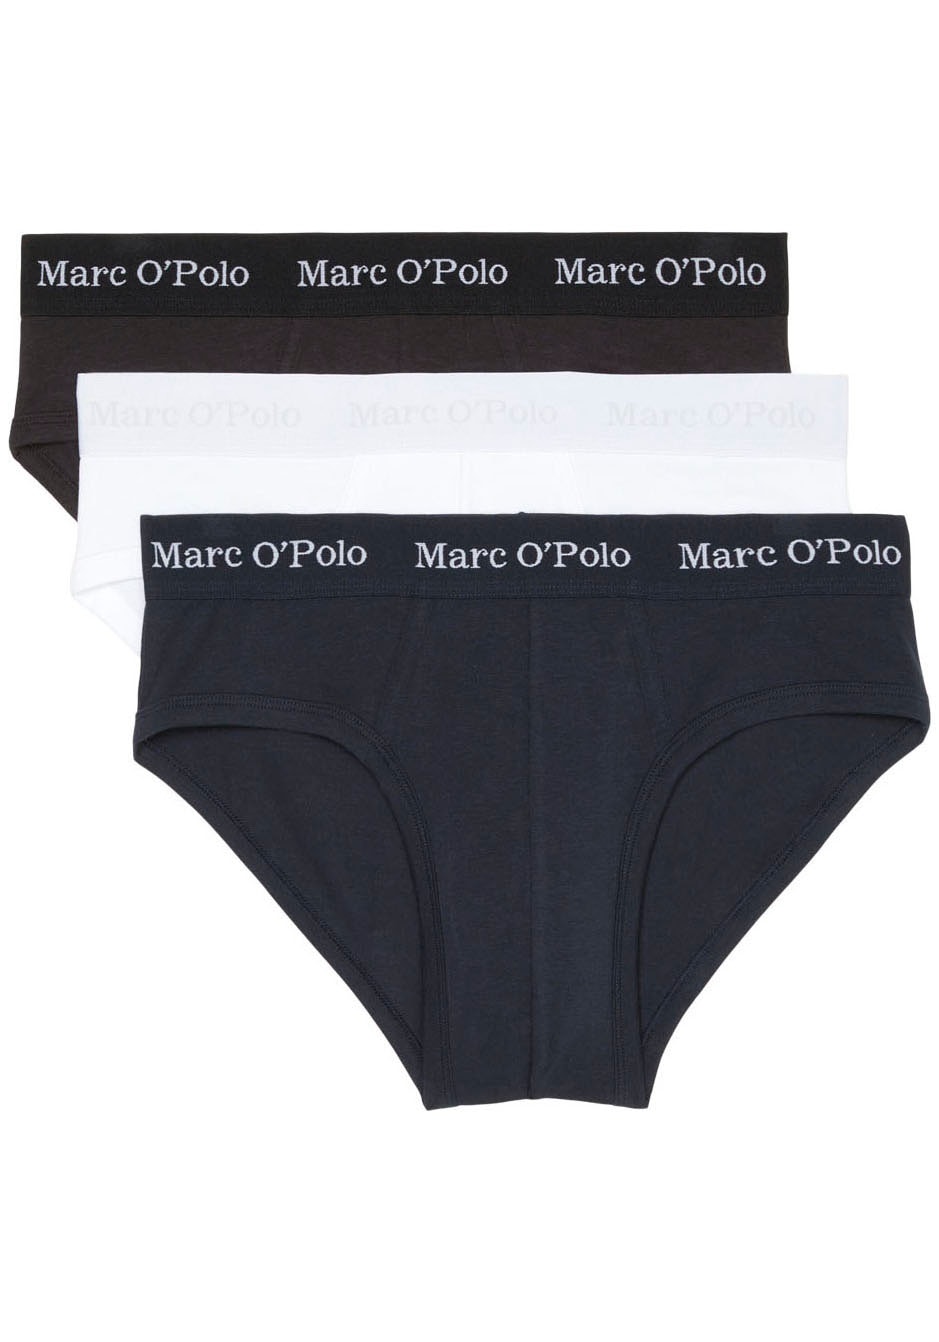 Marc O'Polo Kelnaitės (Packung 3 St.)